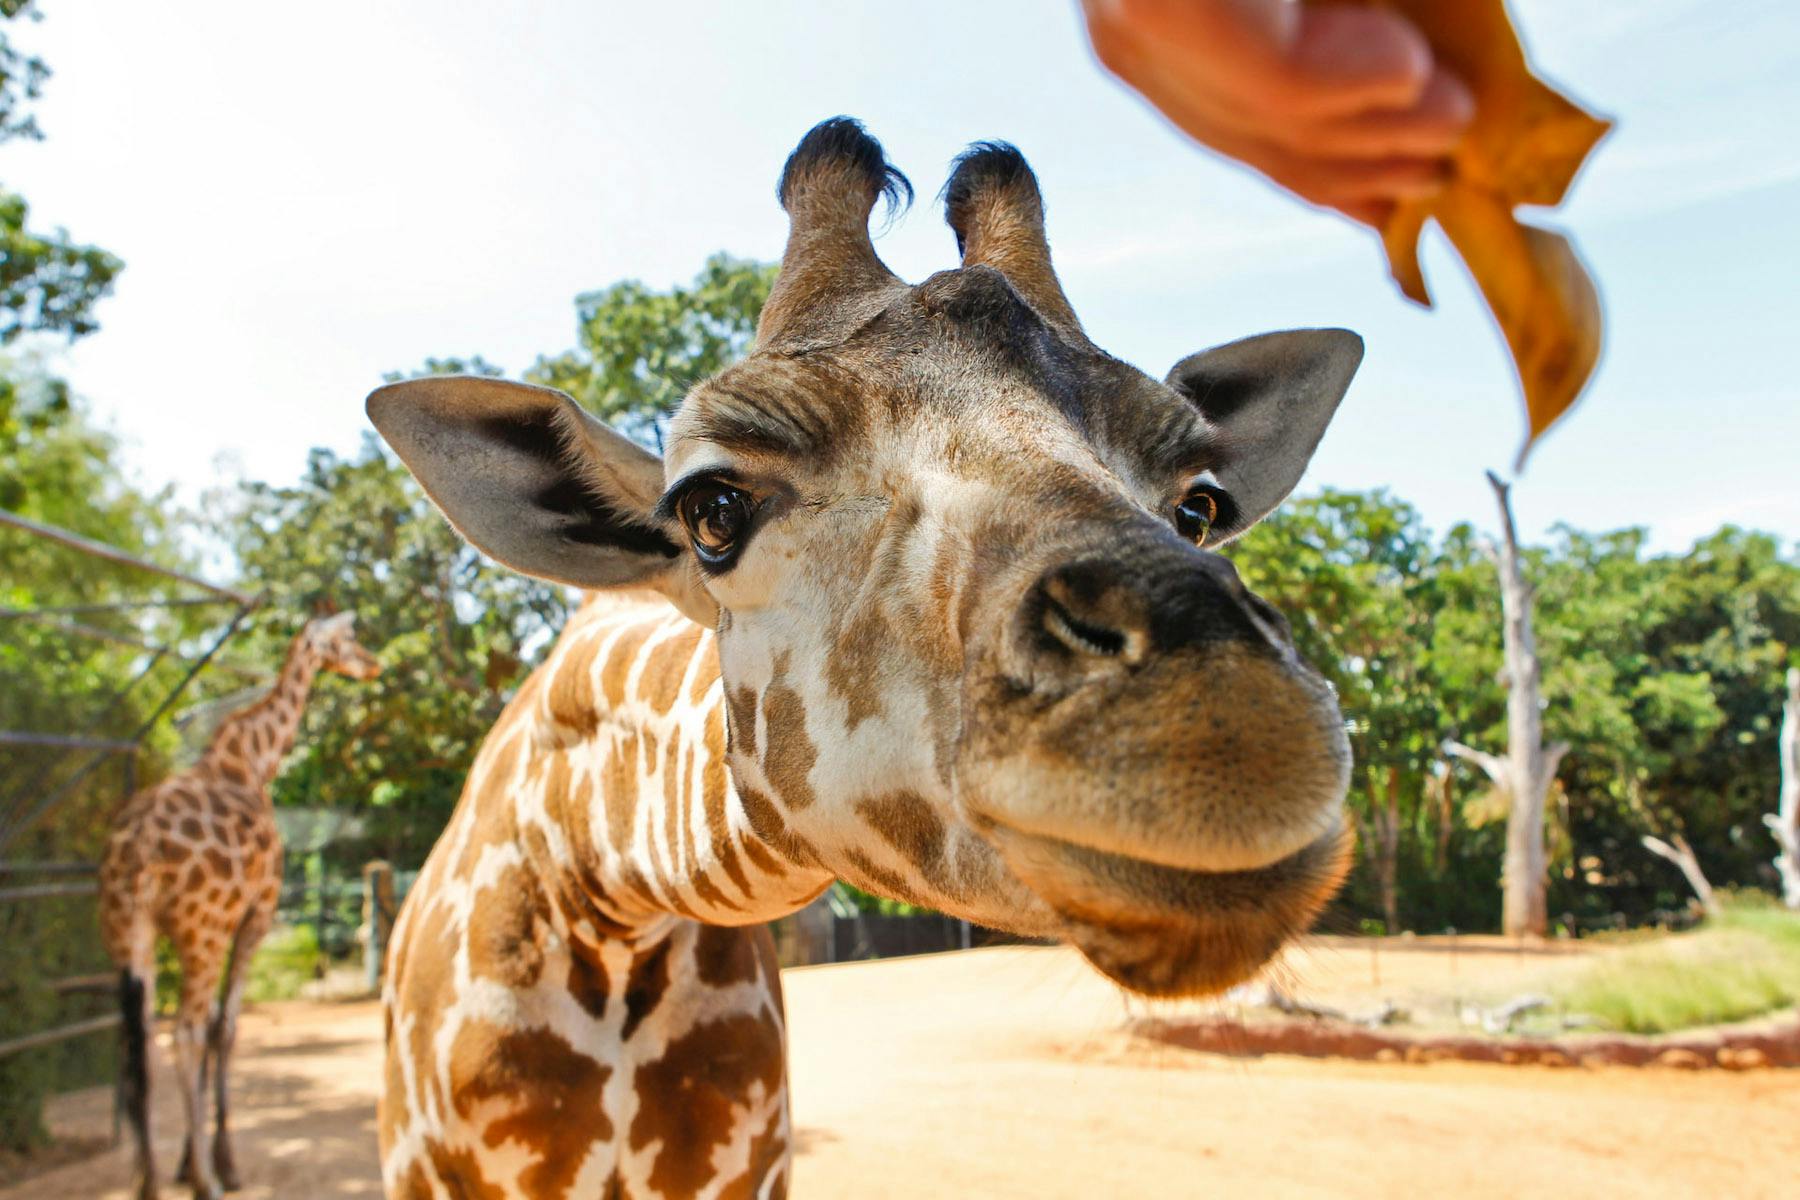 Perth Zoo's giraffe Inkosi to travel to Adelaide today